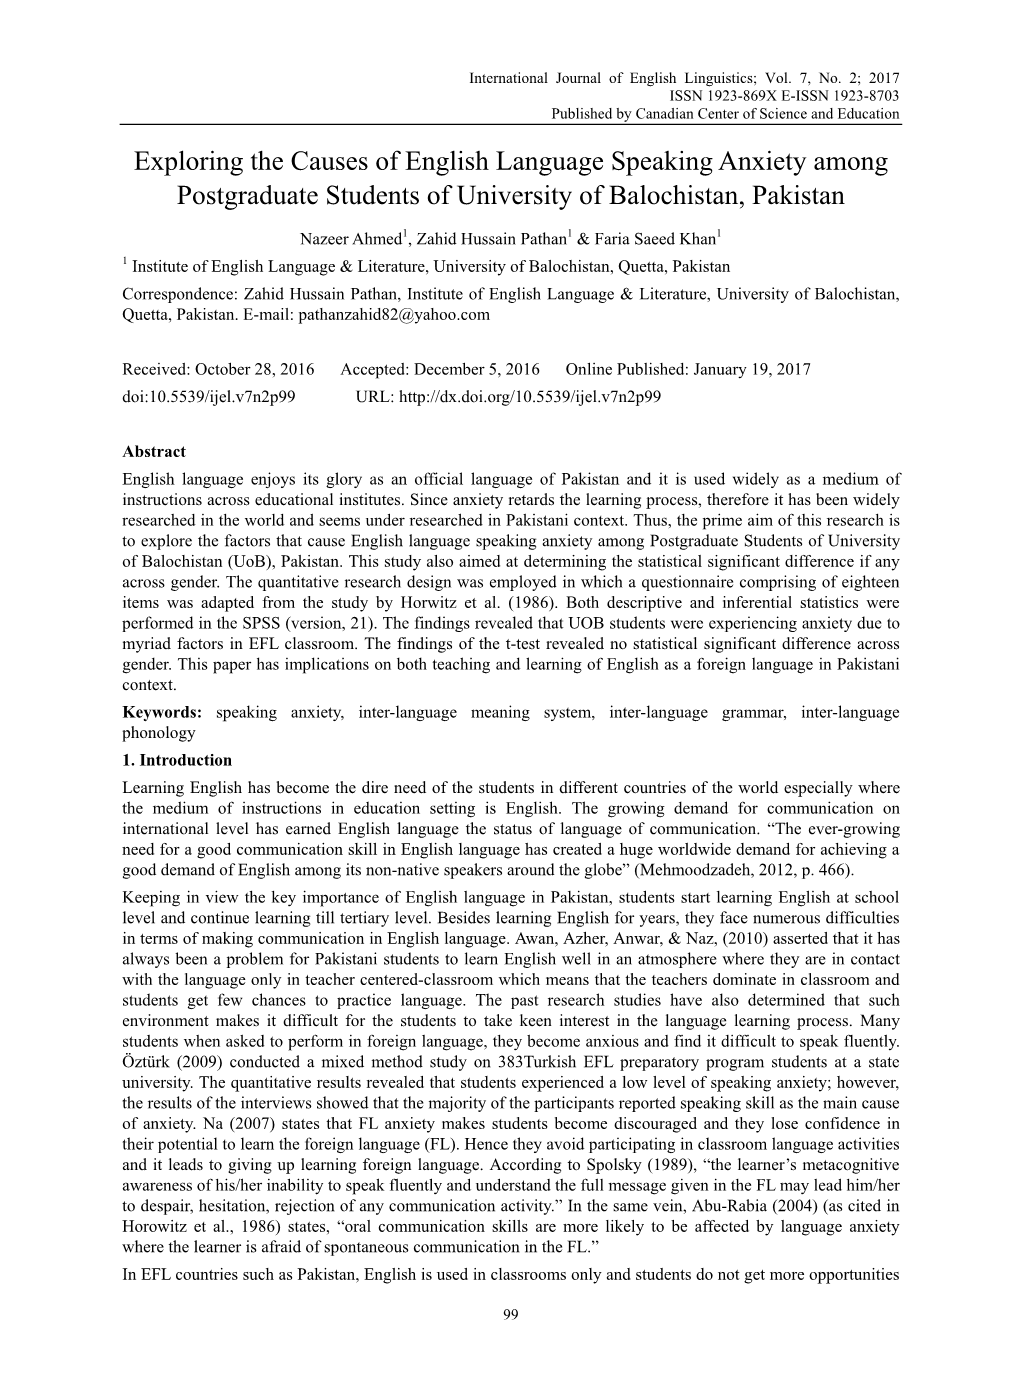 Exploring the Causes of English Language Speaking Anxiety Among Postgraduate Students of University of Balochistan, Pakistan